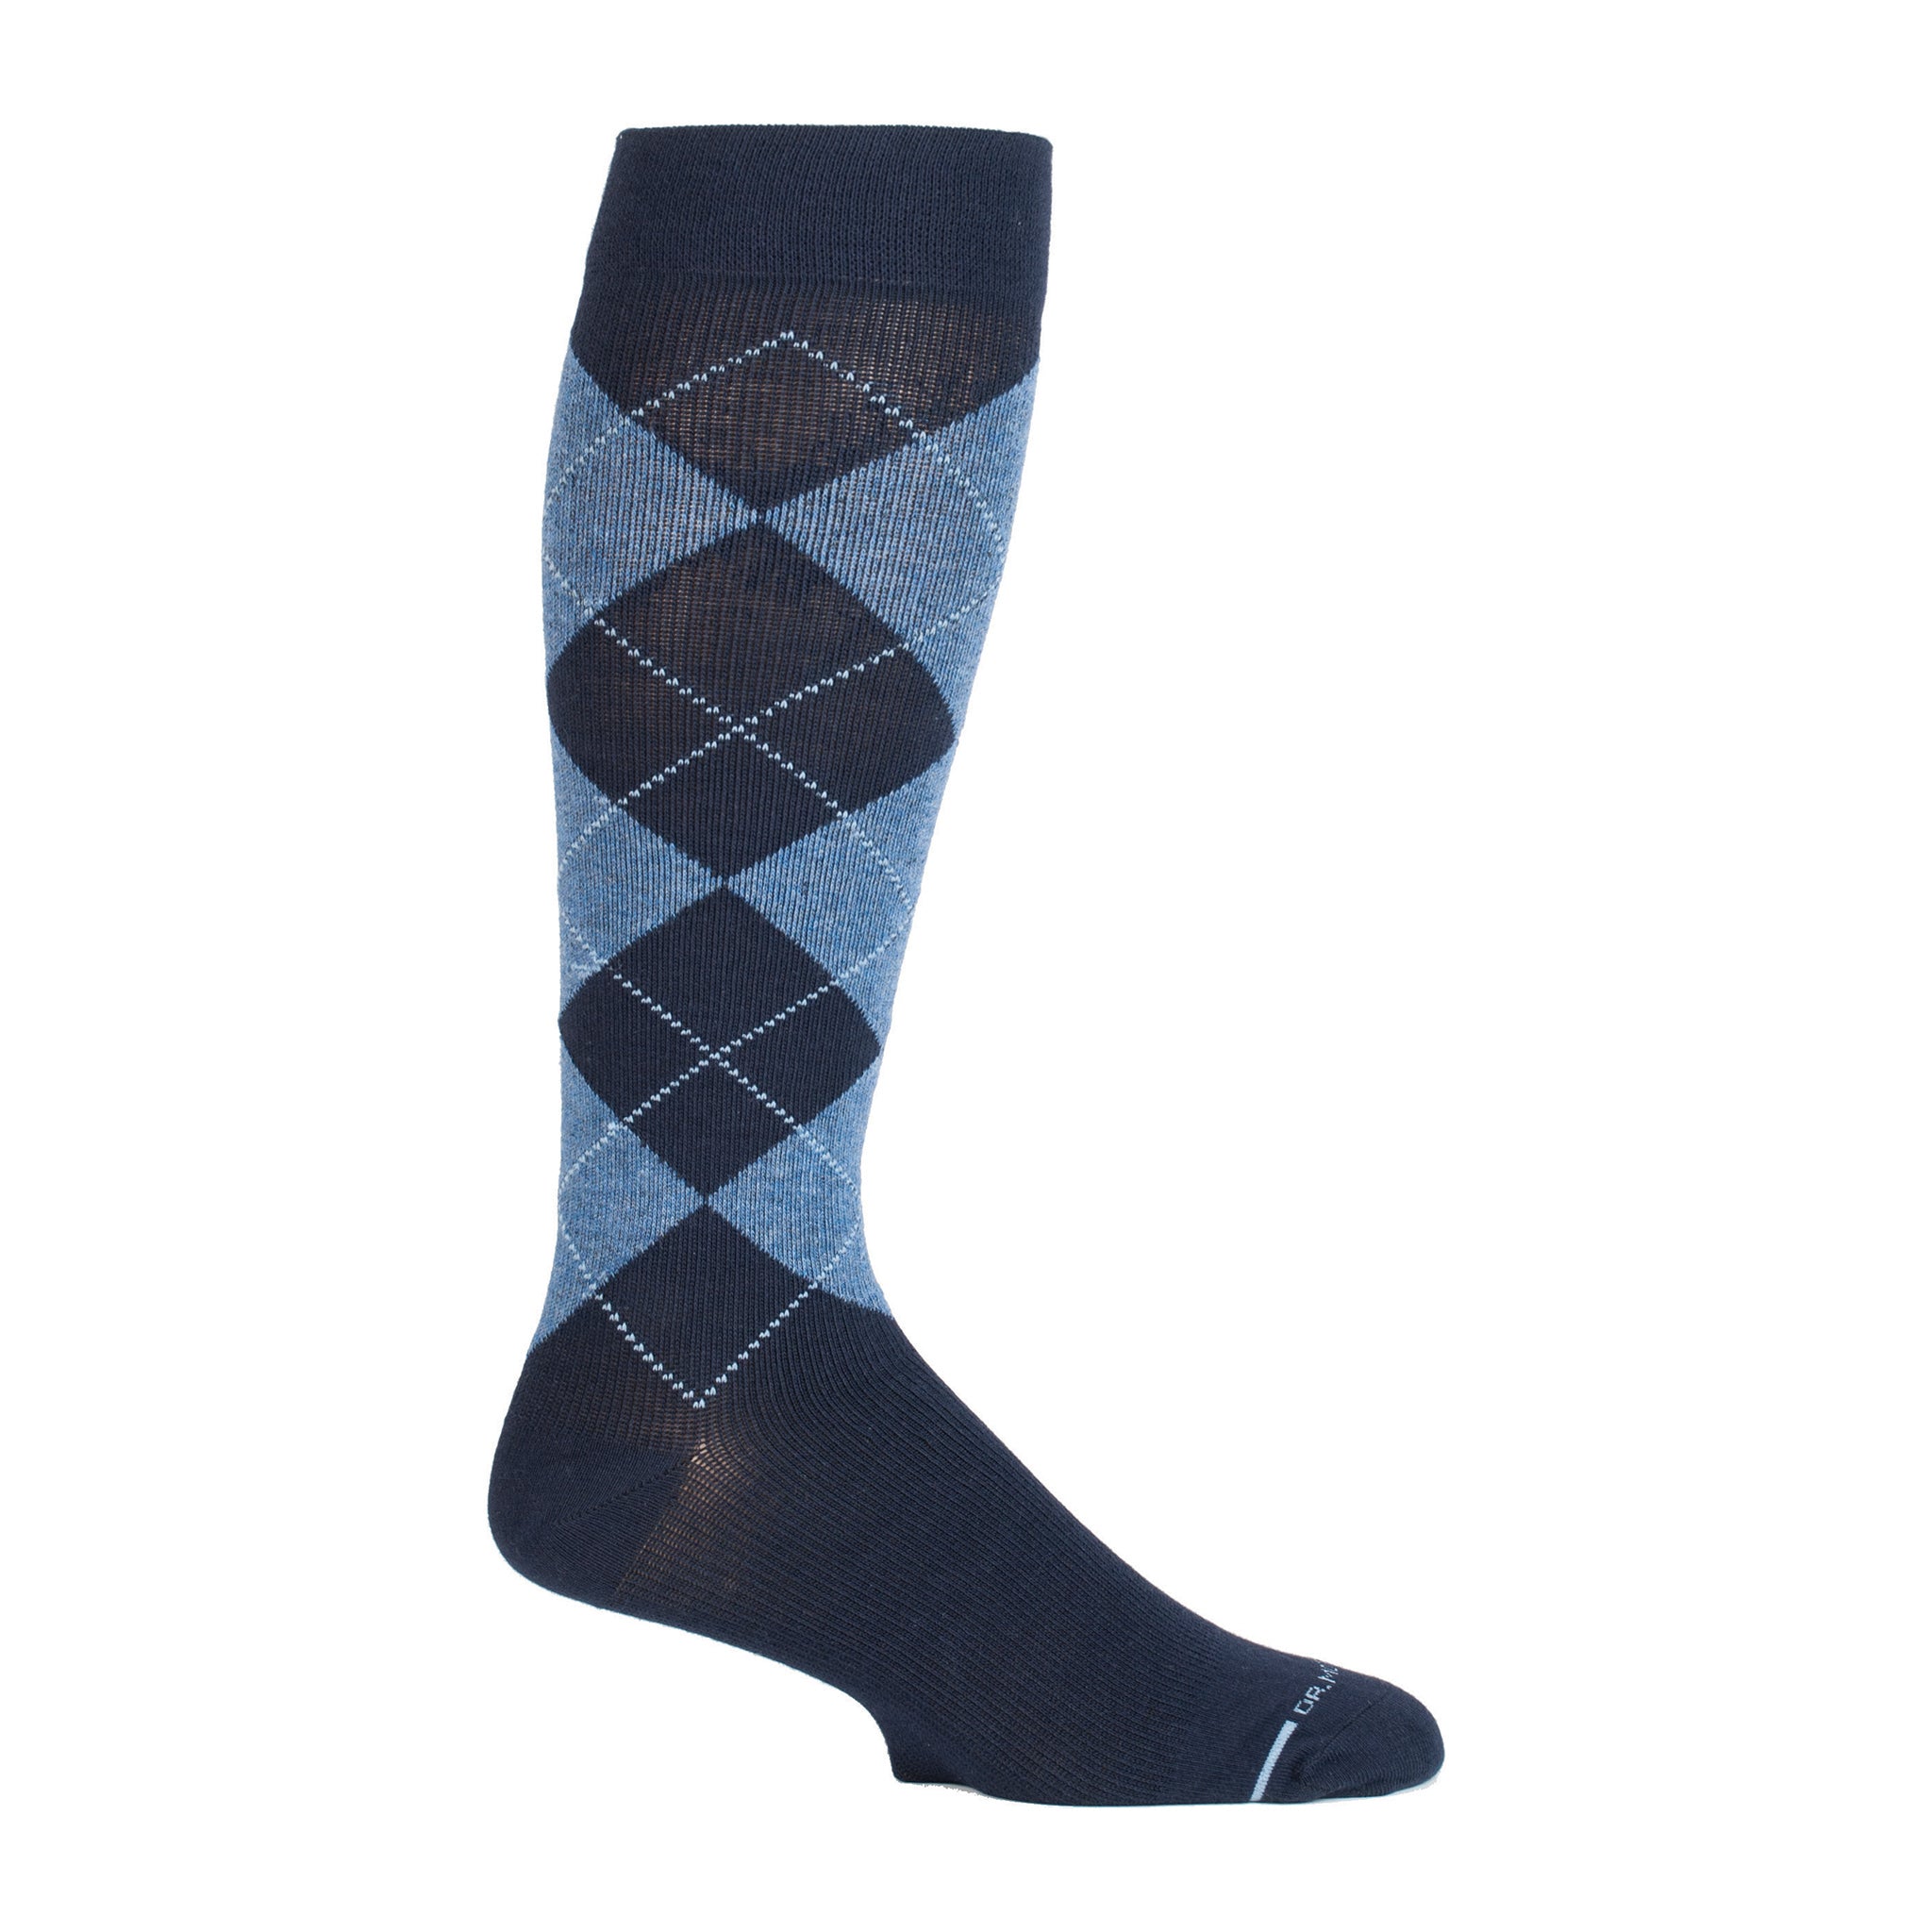 Classic Argyle | Knee-High Compression Socks For Men